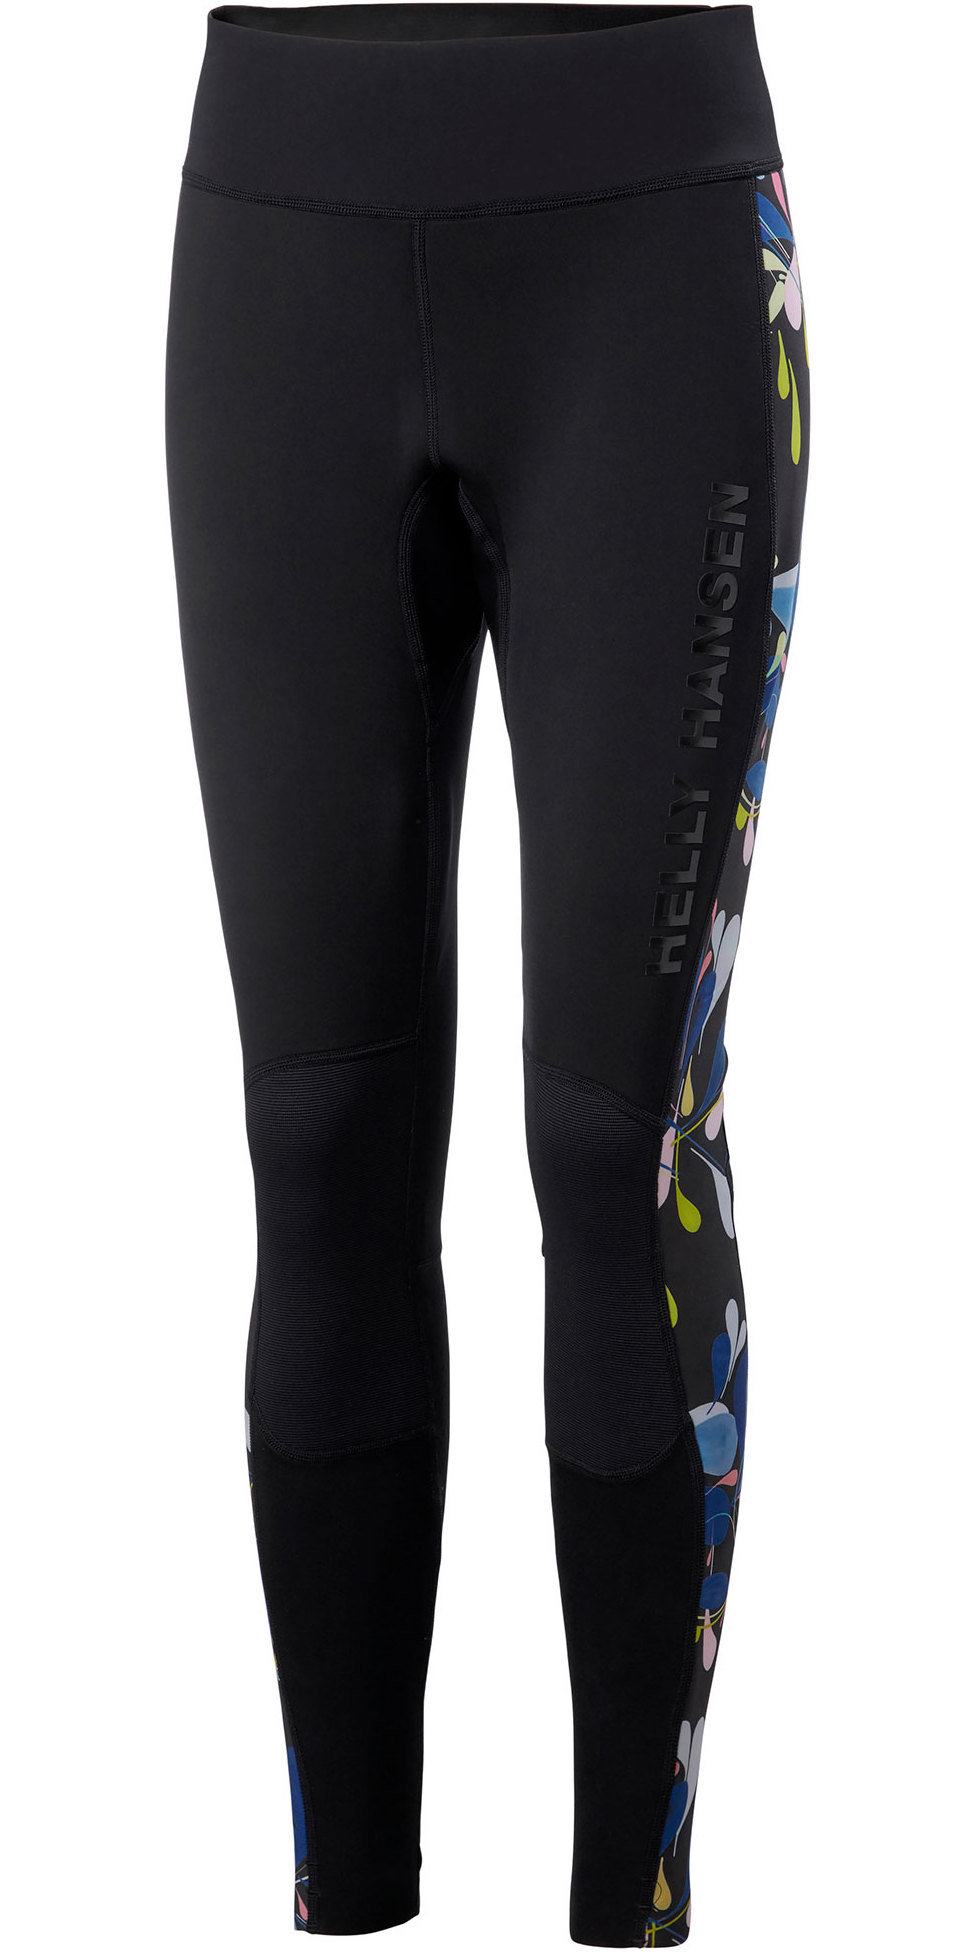 Helly Hansen Womens Water Wear 2mm Neoprene Wetsuit Trousers Black Ergonomic fit Easy Stretch Breathable